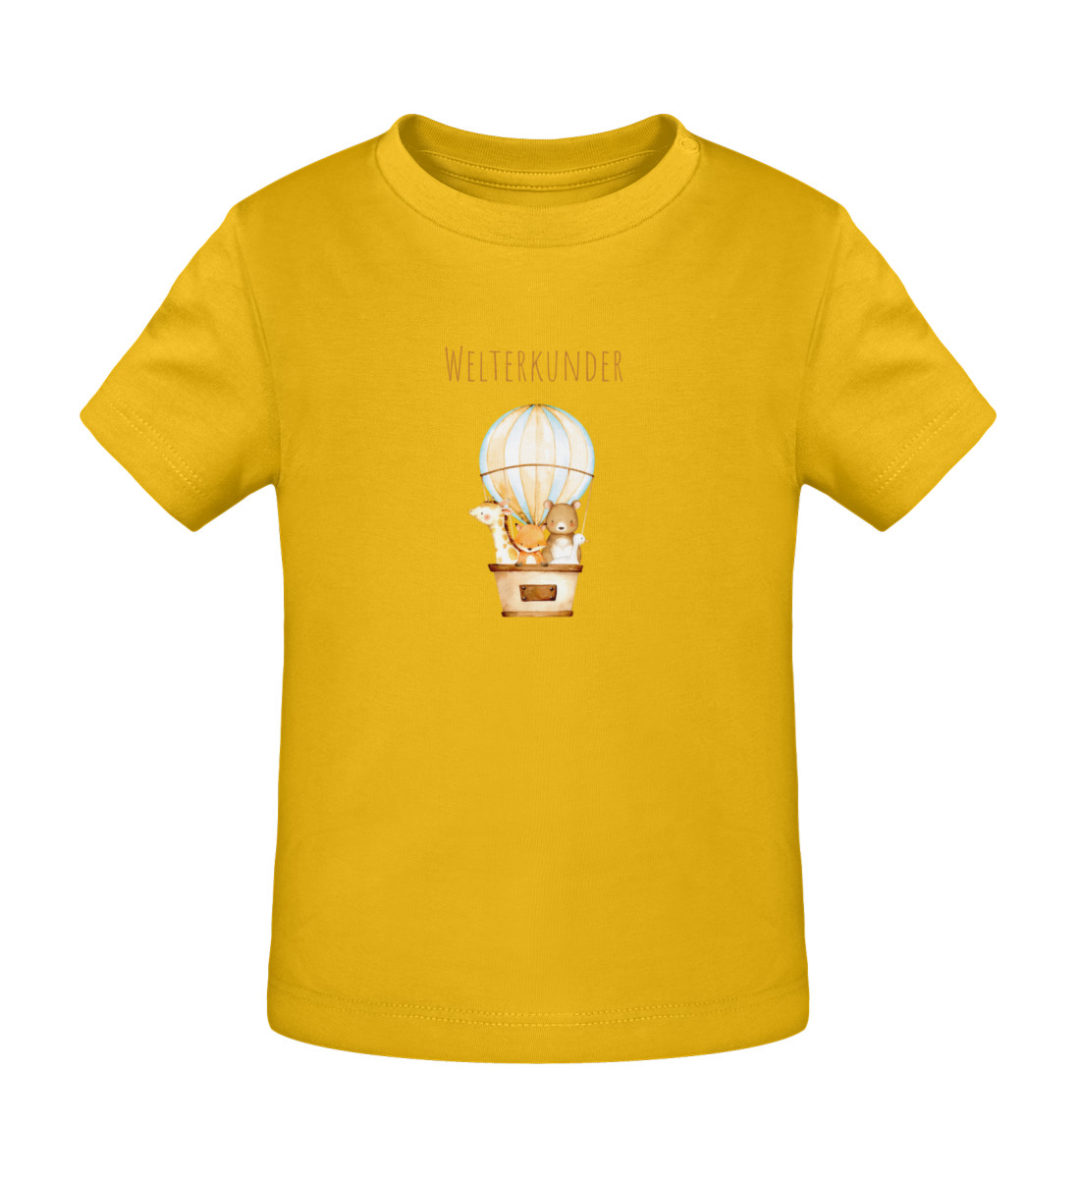 Welterkunder - Baby Creator T-Shirt ST/ST-6885